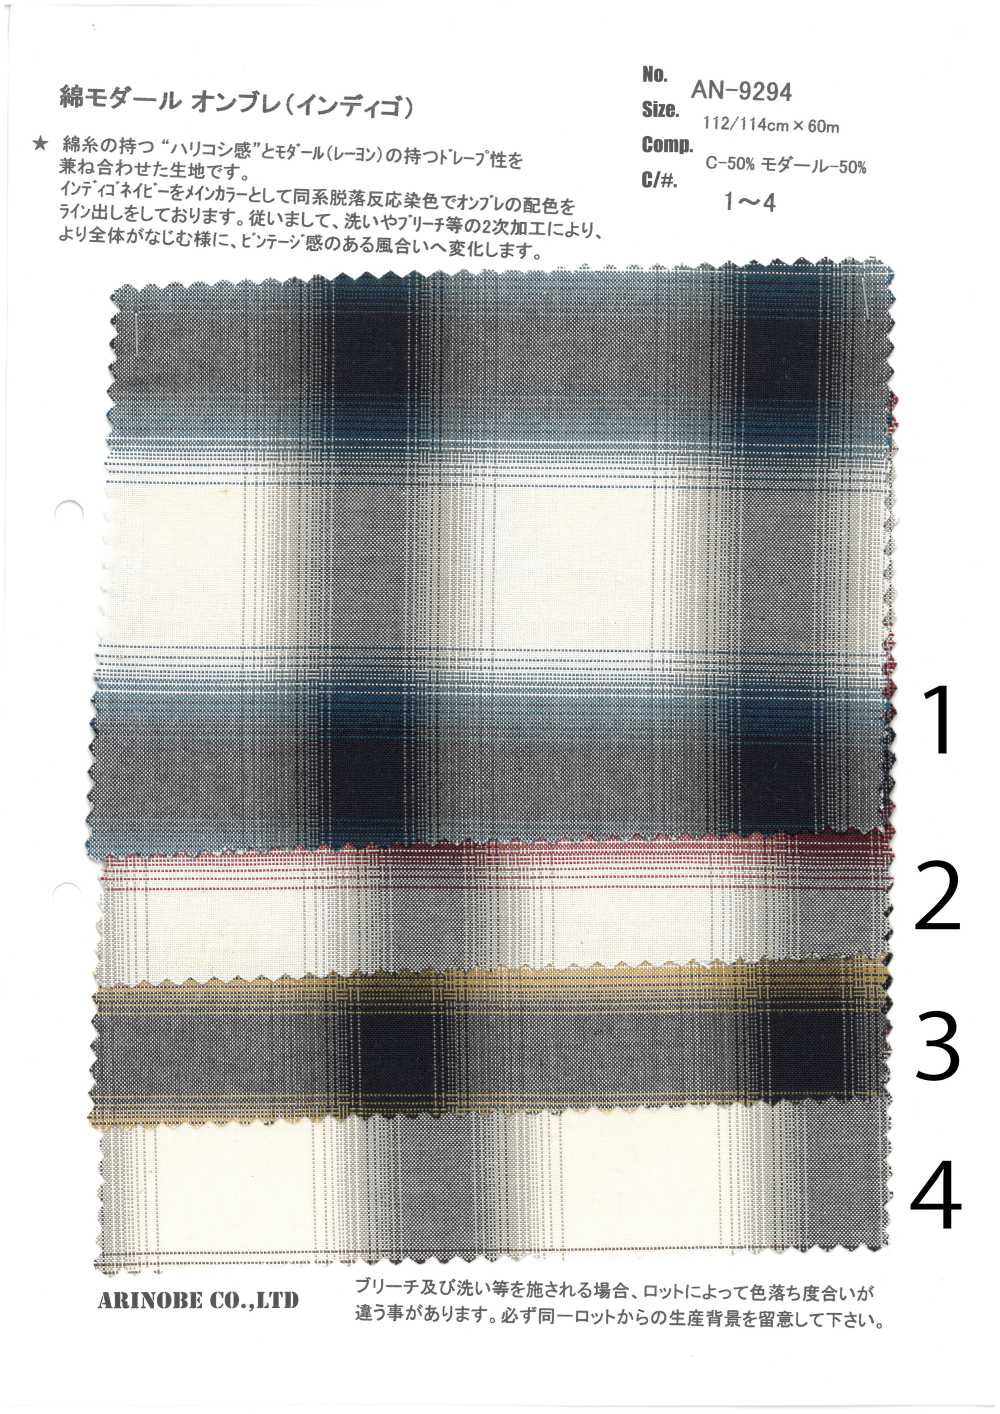 AN-9294 Indigo Baumwolle Modal Ombre[Textilgewebe] ARINOBE CO., LTD.